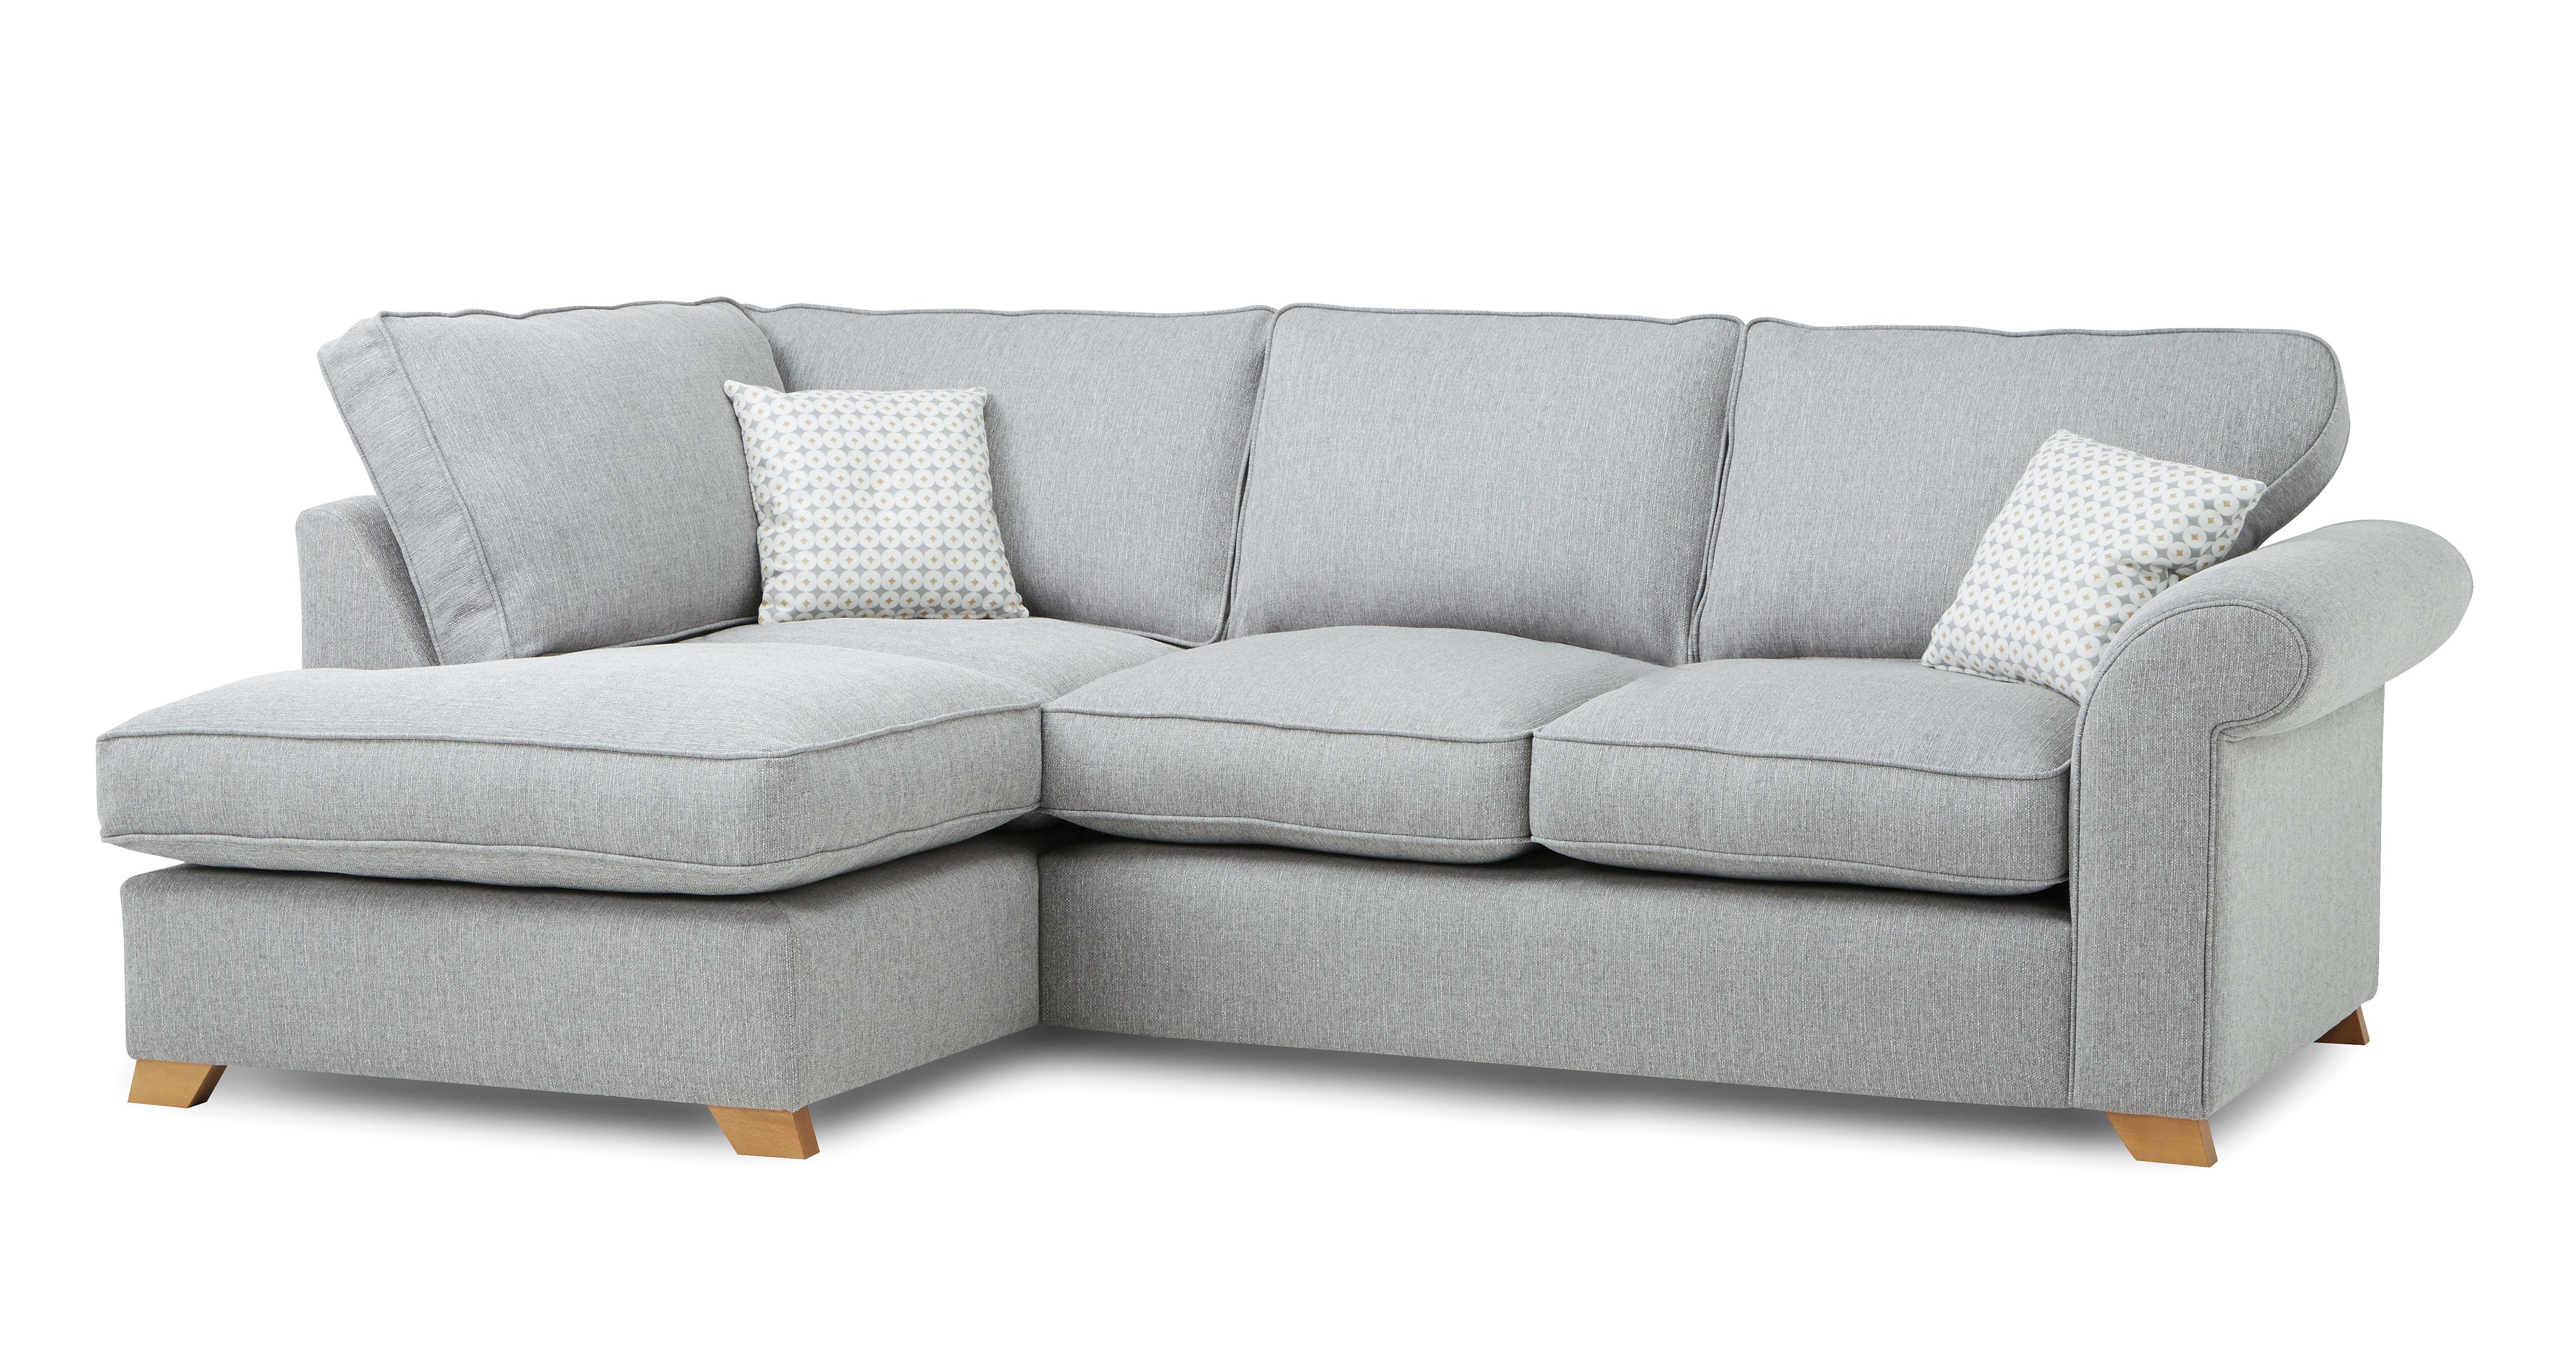 dfs fabric corner sofa beds